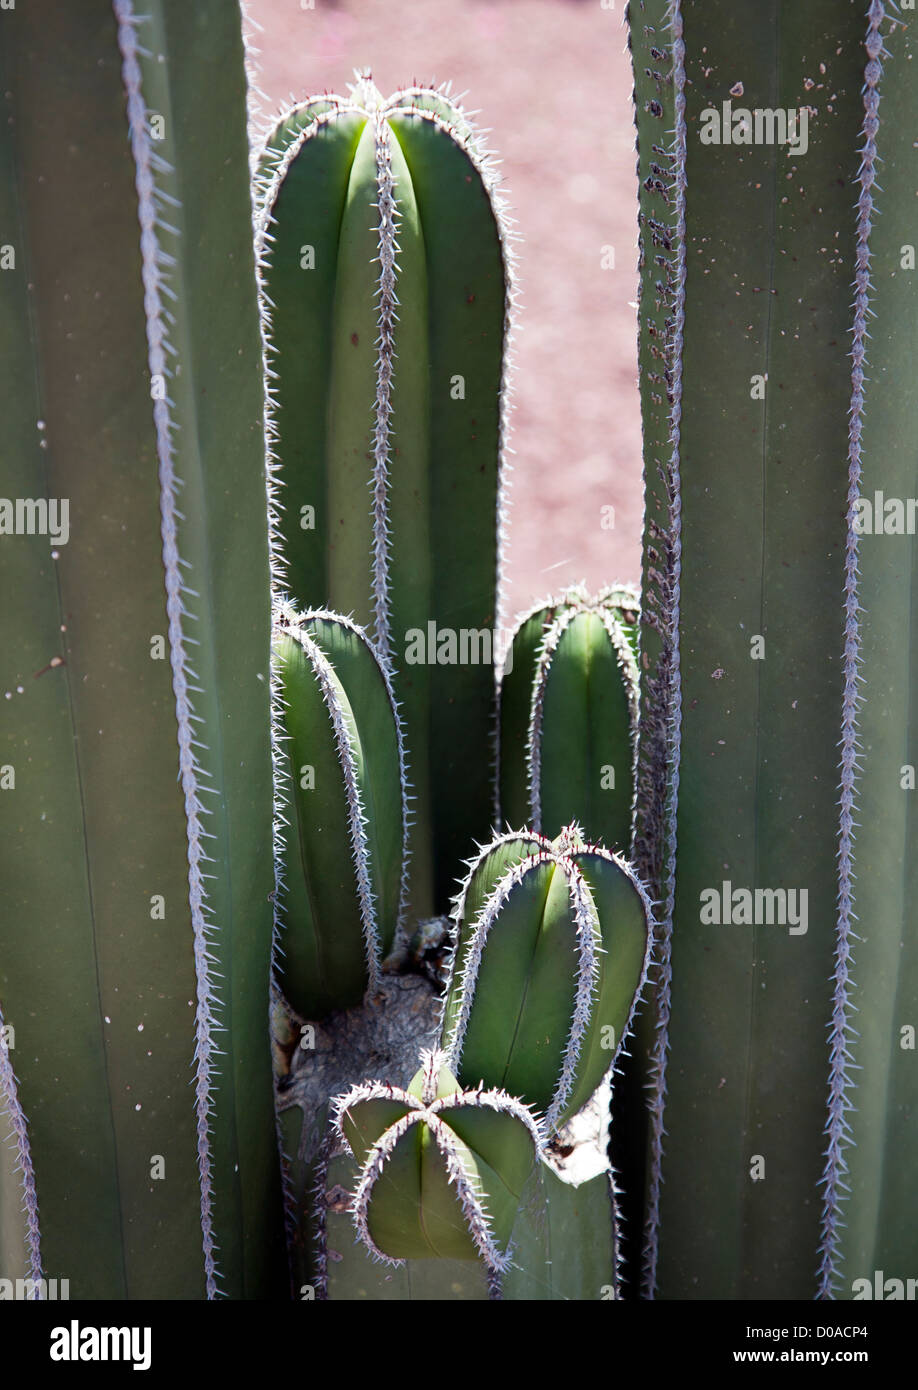 Pachycereus marginatus or órganos, Cacti in Mexico, Teotihuacan Stock Photo